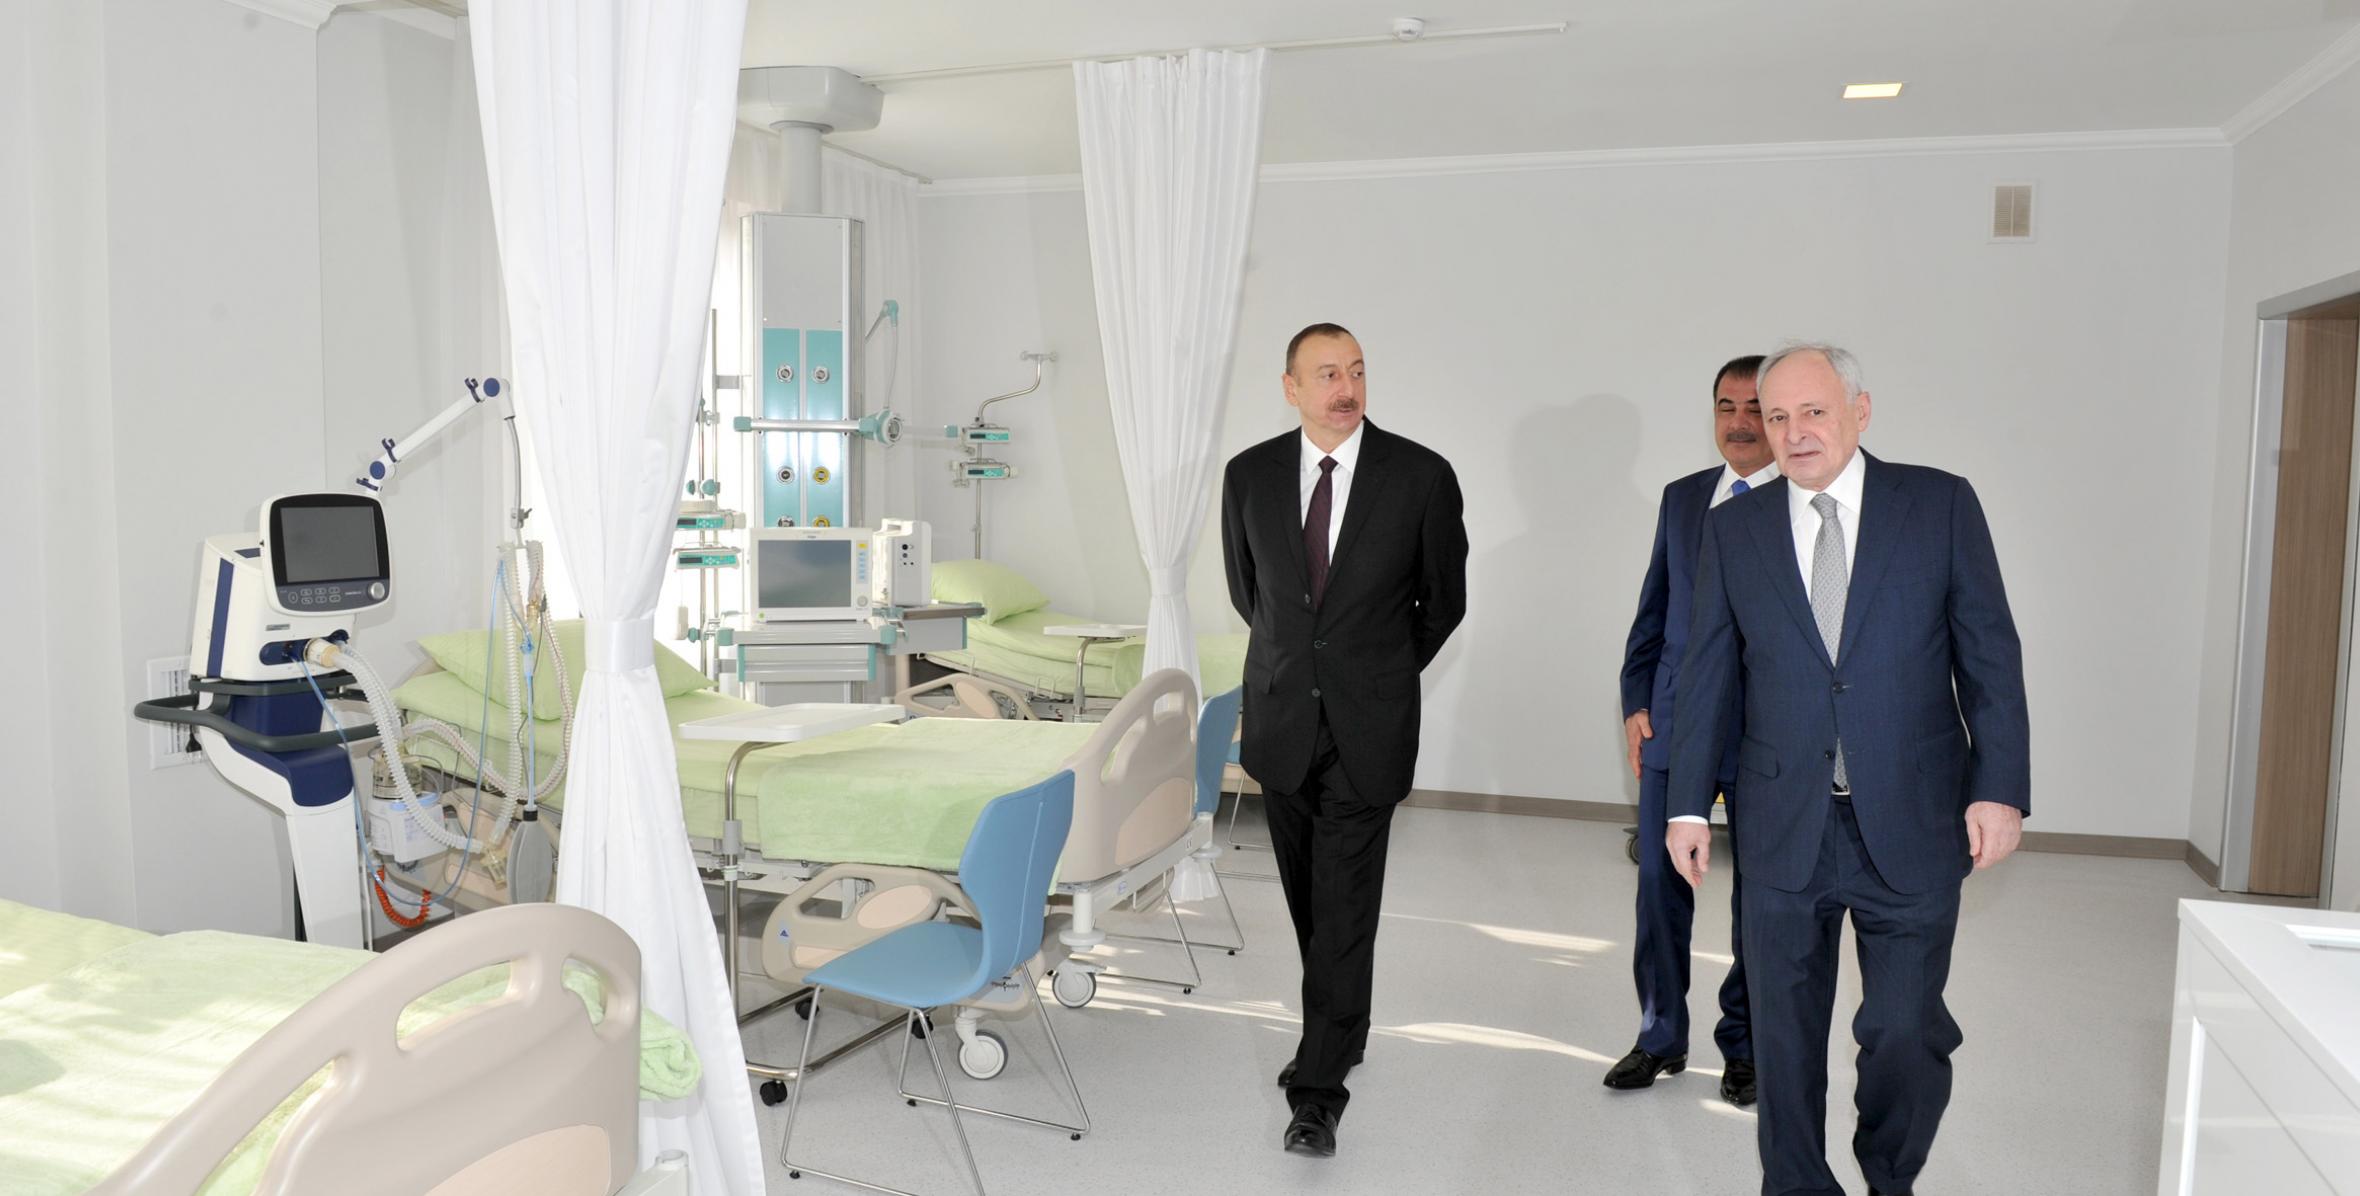 Ilham Aliyev reviewed Abbas Sahhat city hospital No. 1 in Ganja after major overhaul